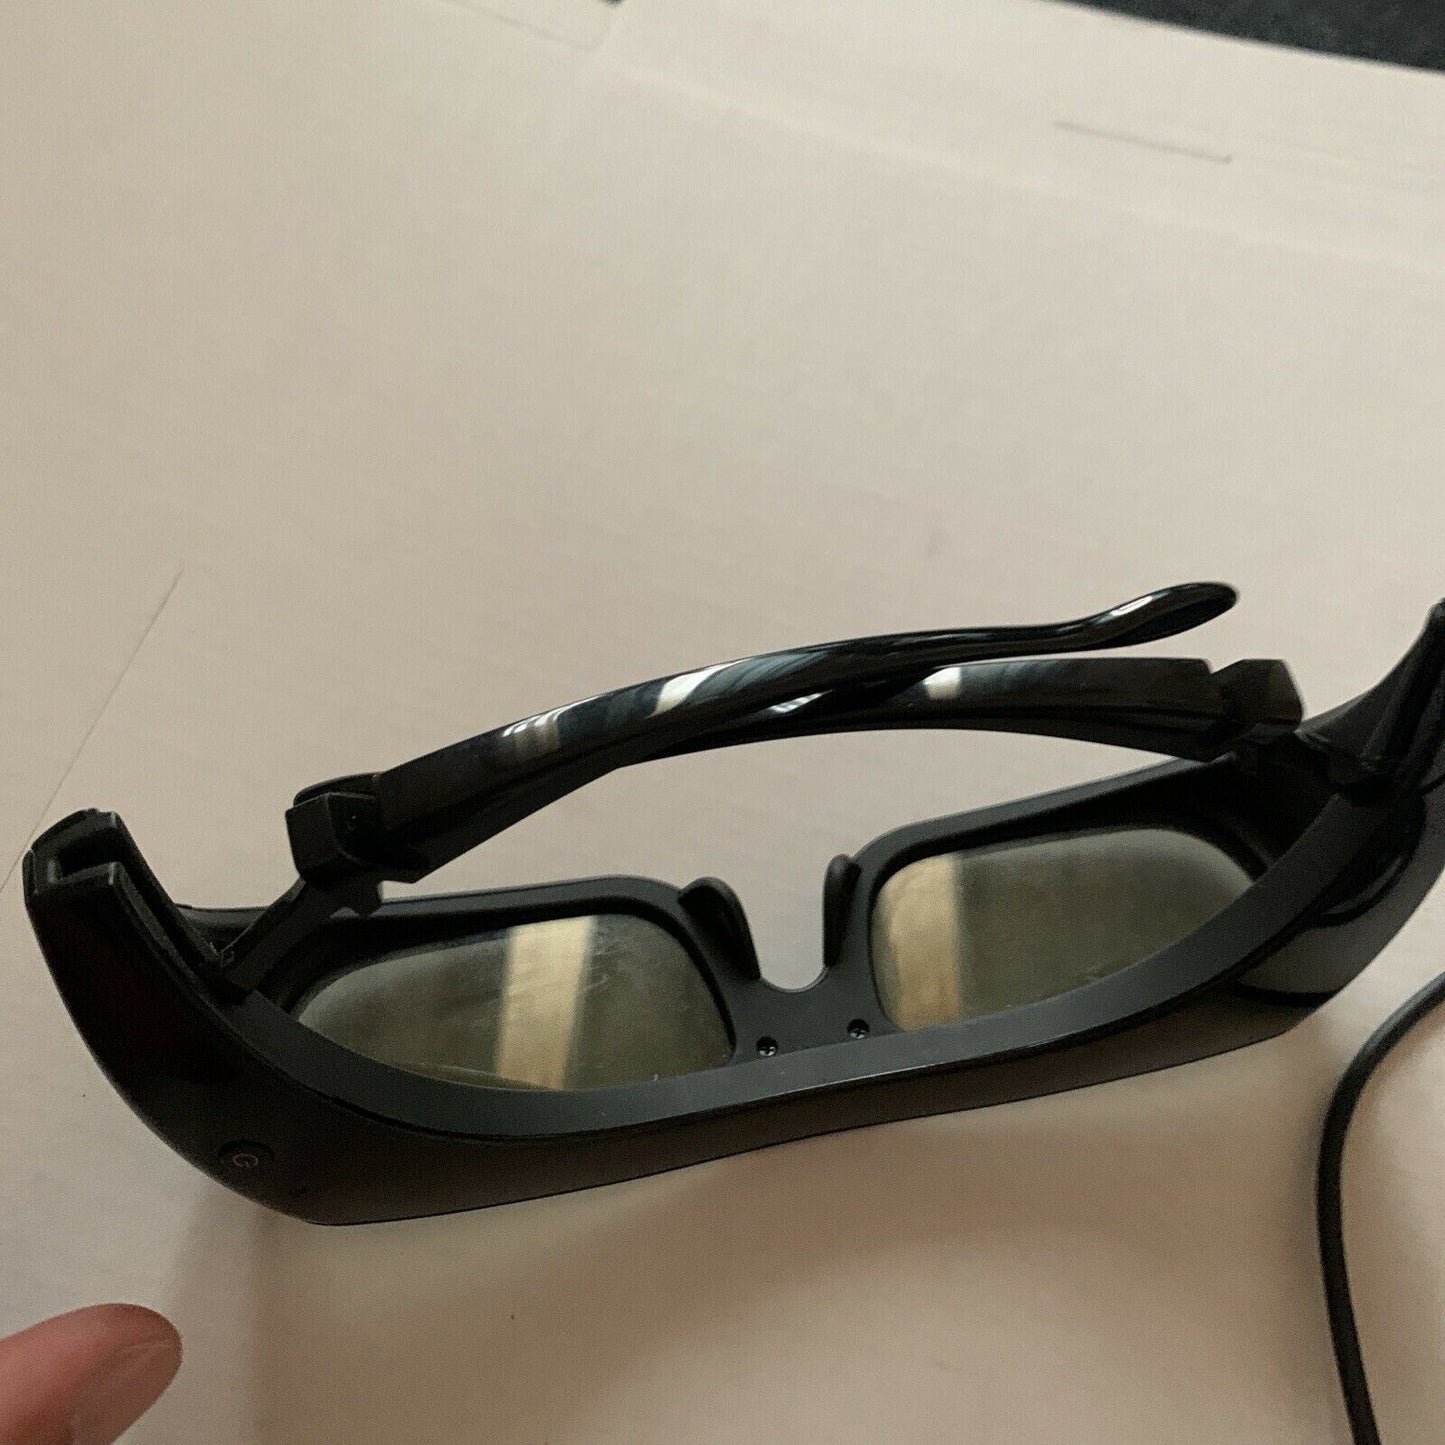 Original Sony TDG-BR250 3D Active Shutter Glasses For Sony Bravia TV & USB Cable